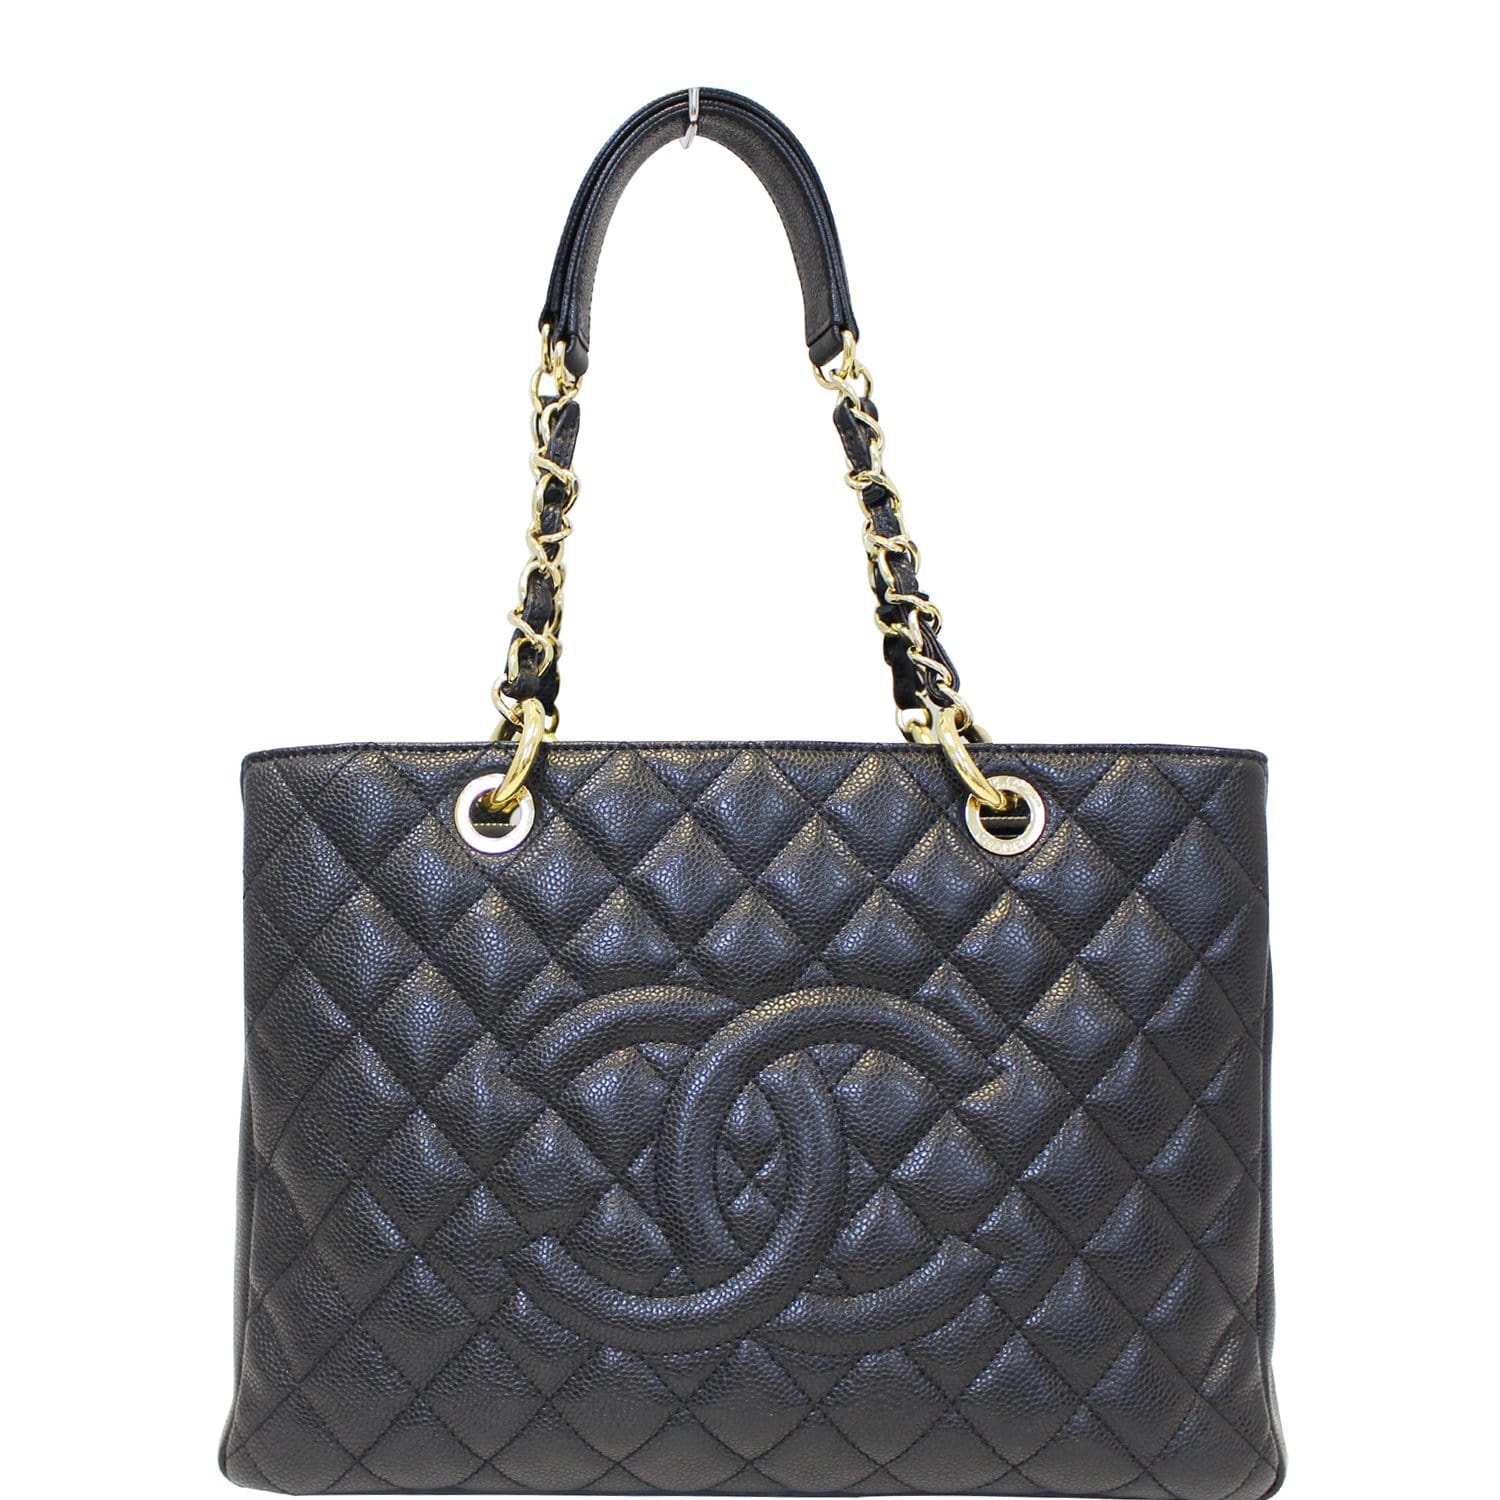 Forinden international skarpt Chanel Grand Shopping Leather Black - Chanel Tote Bag